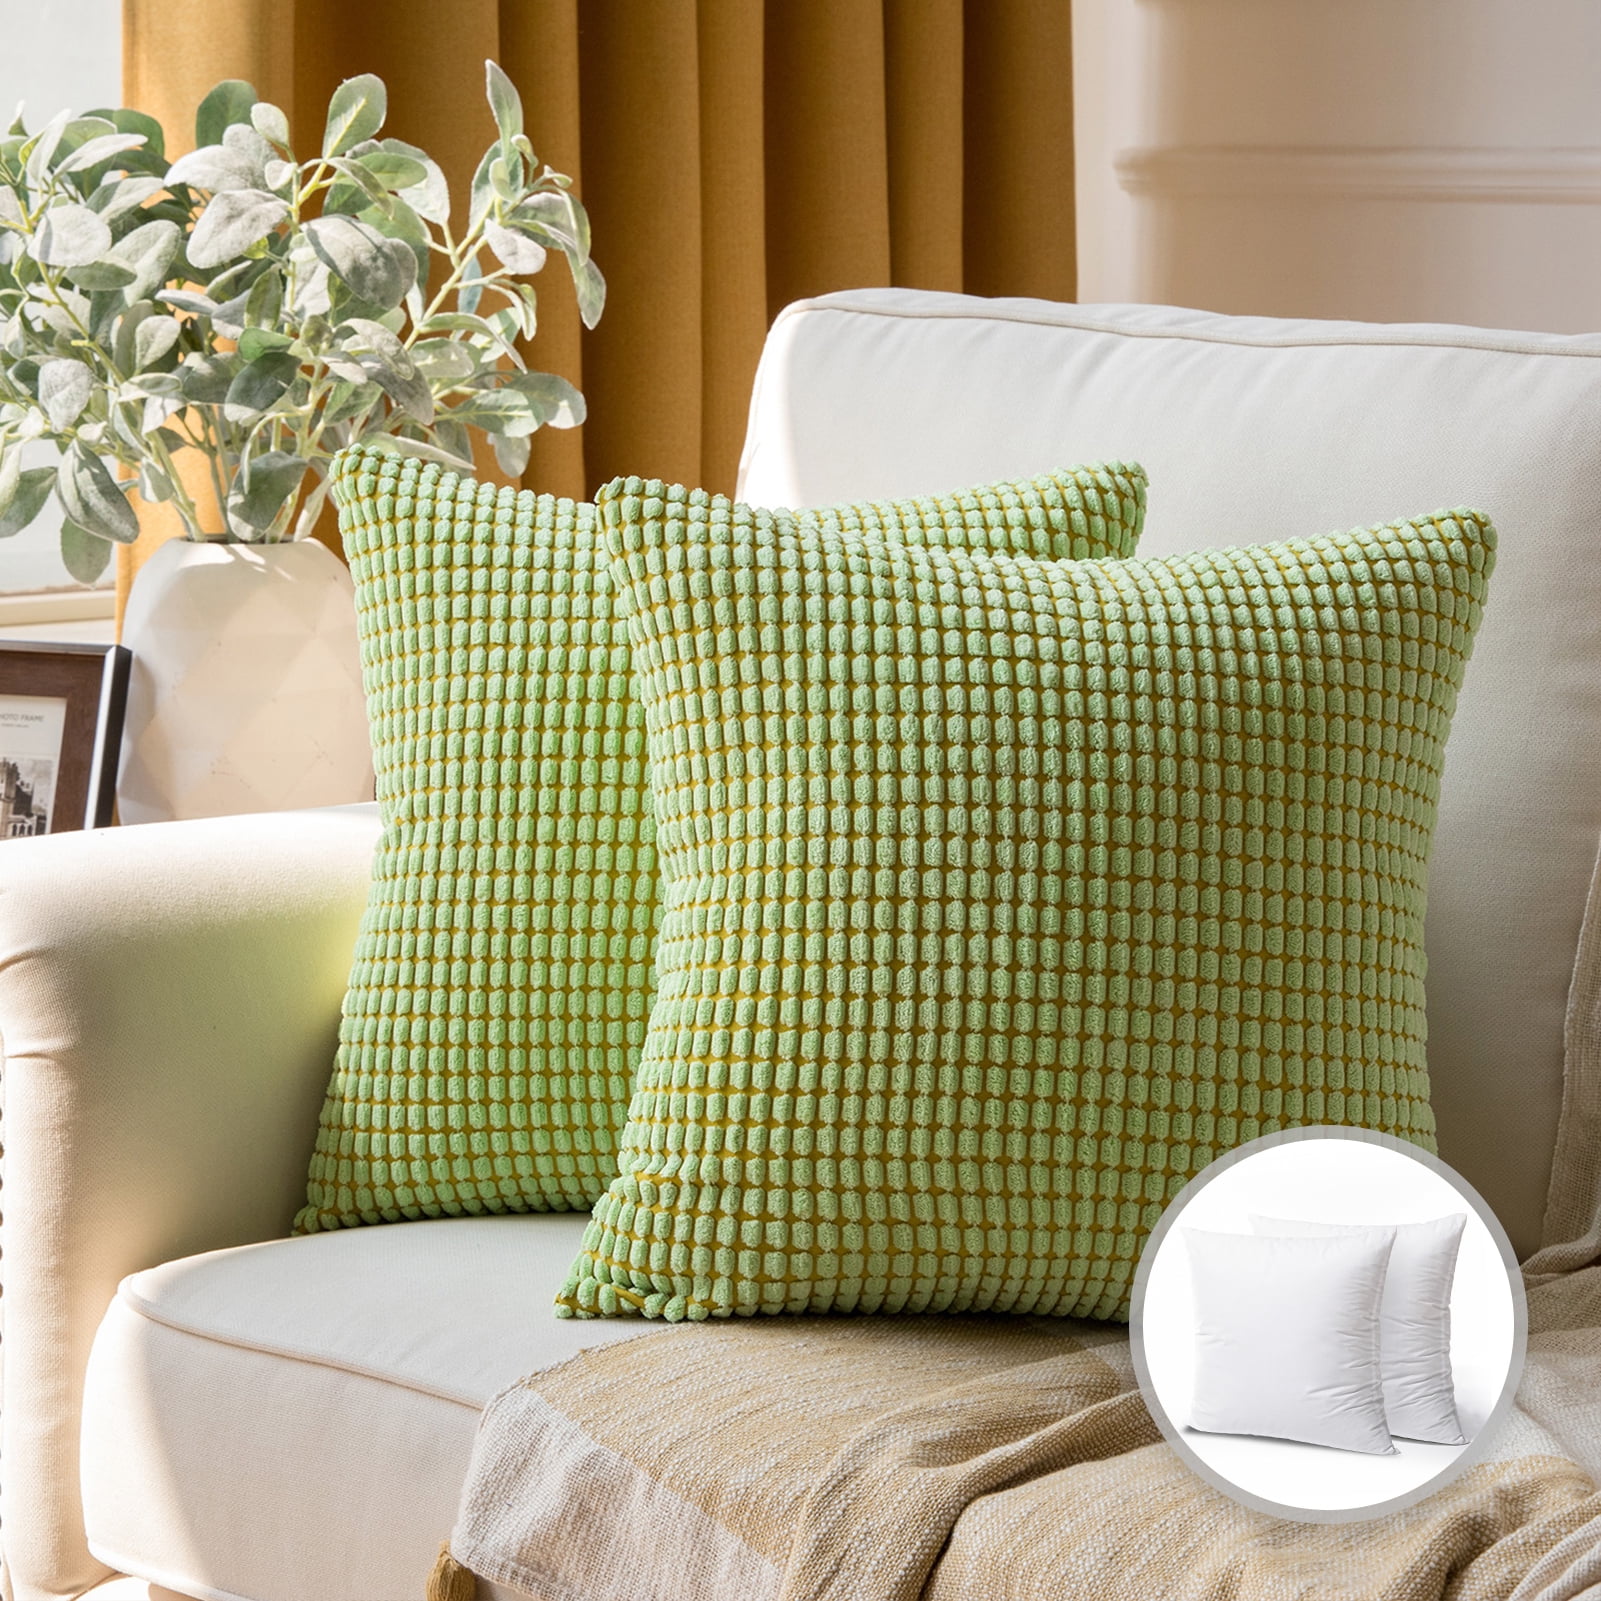 Soft Corduroy Corn Striped Velvet Series Decorative Throw Pillow, 18 x 18,  Orange, 2 Pack 